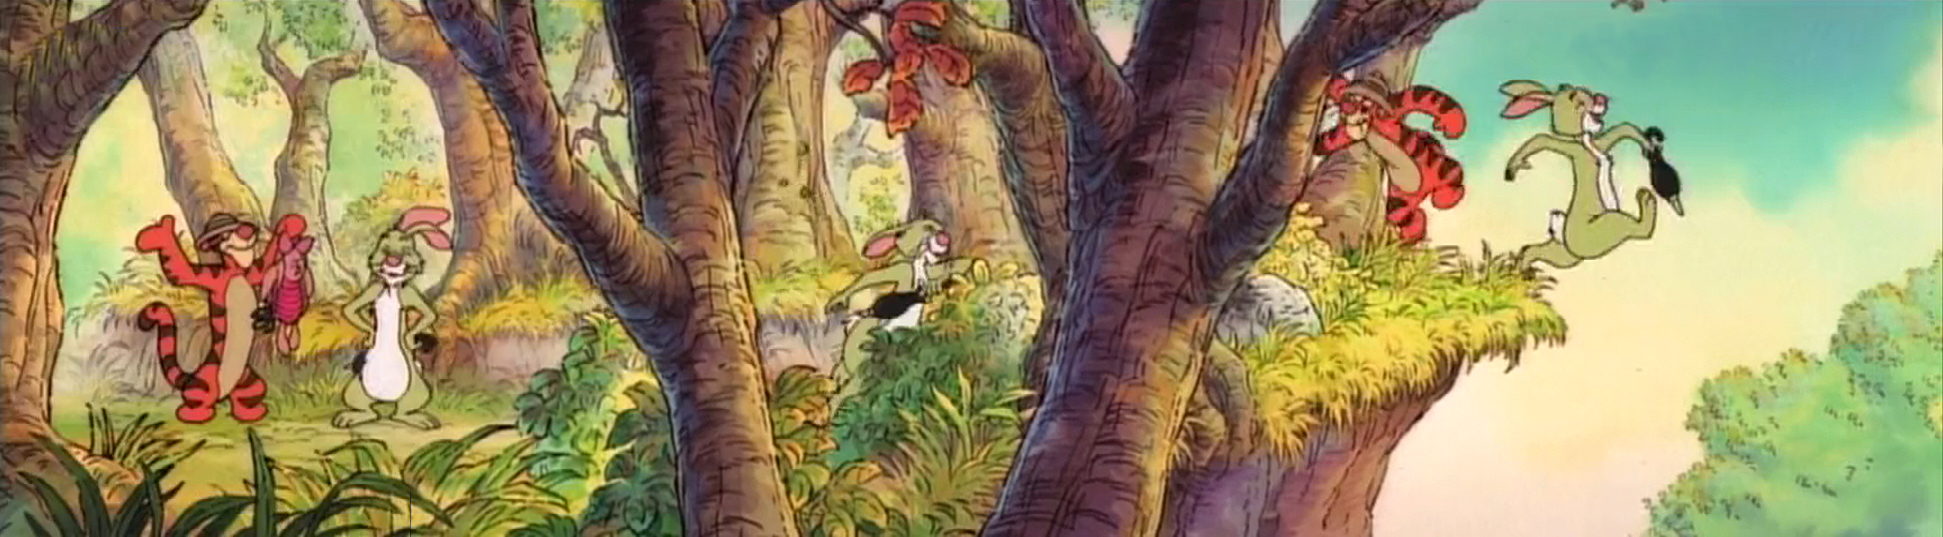 Tygr a Králík v lese panorama